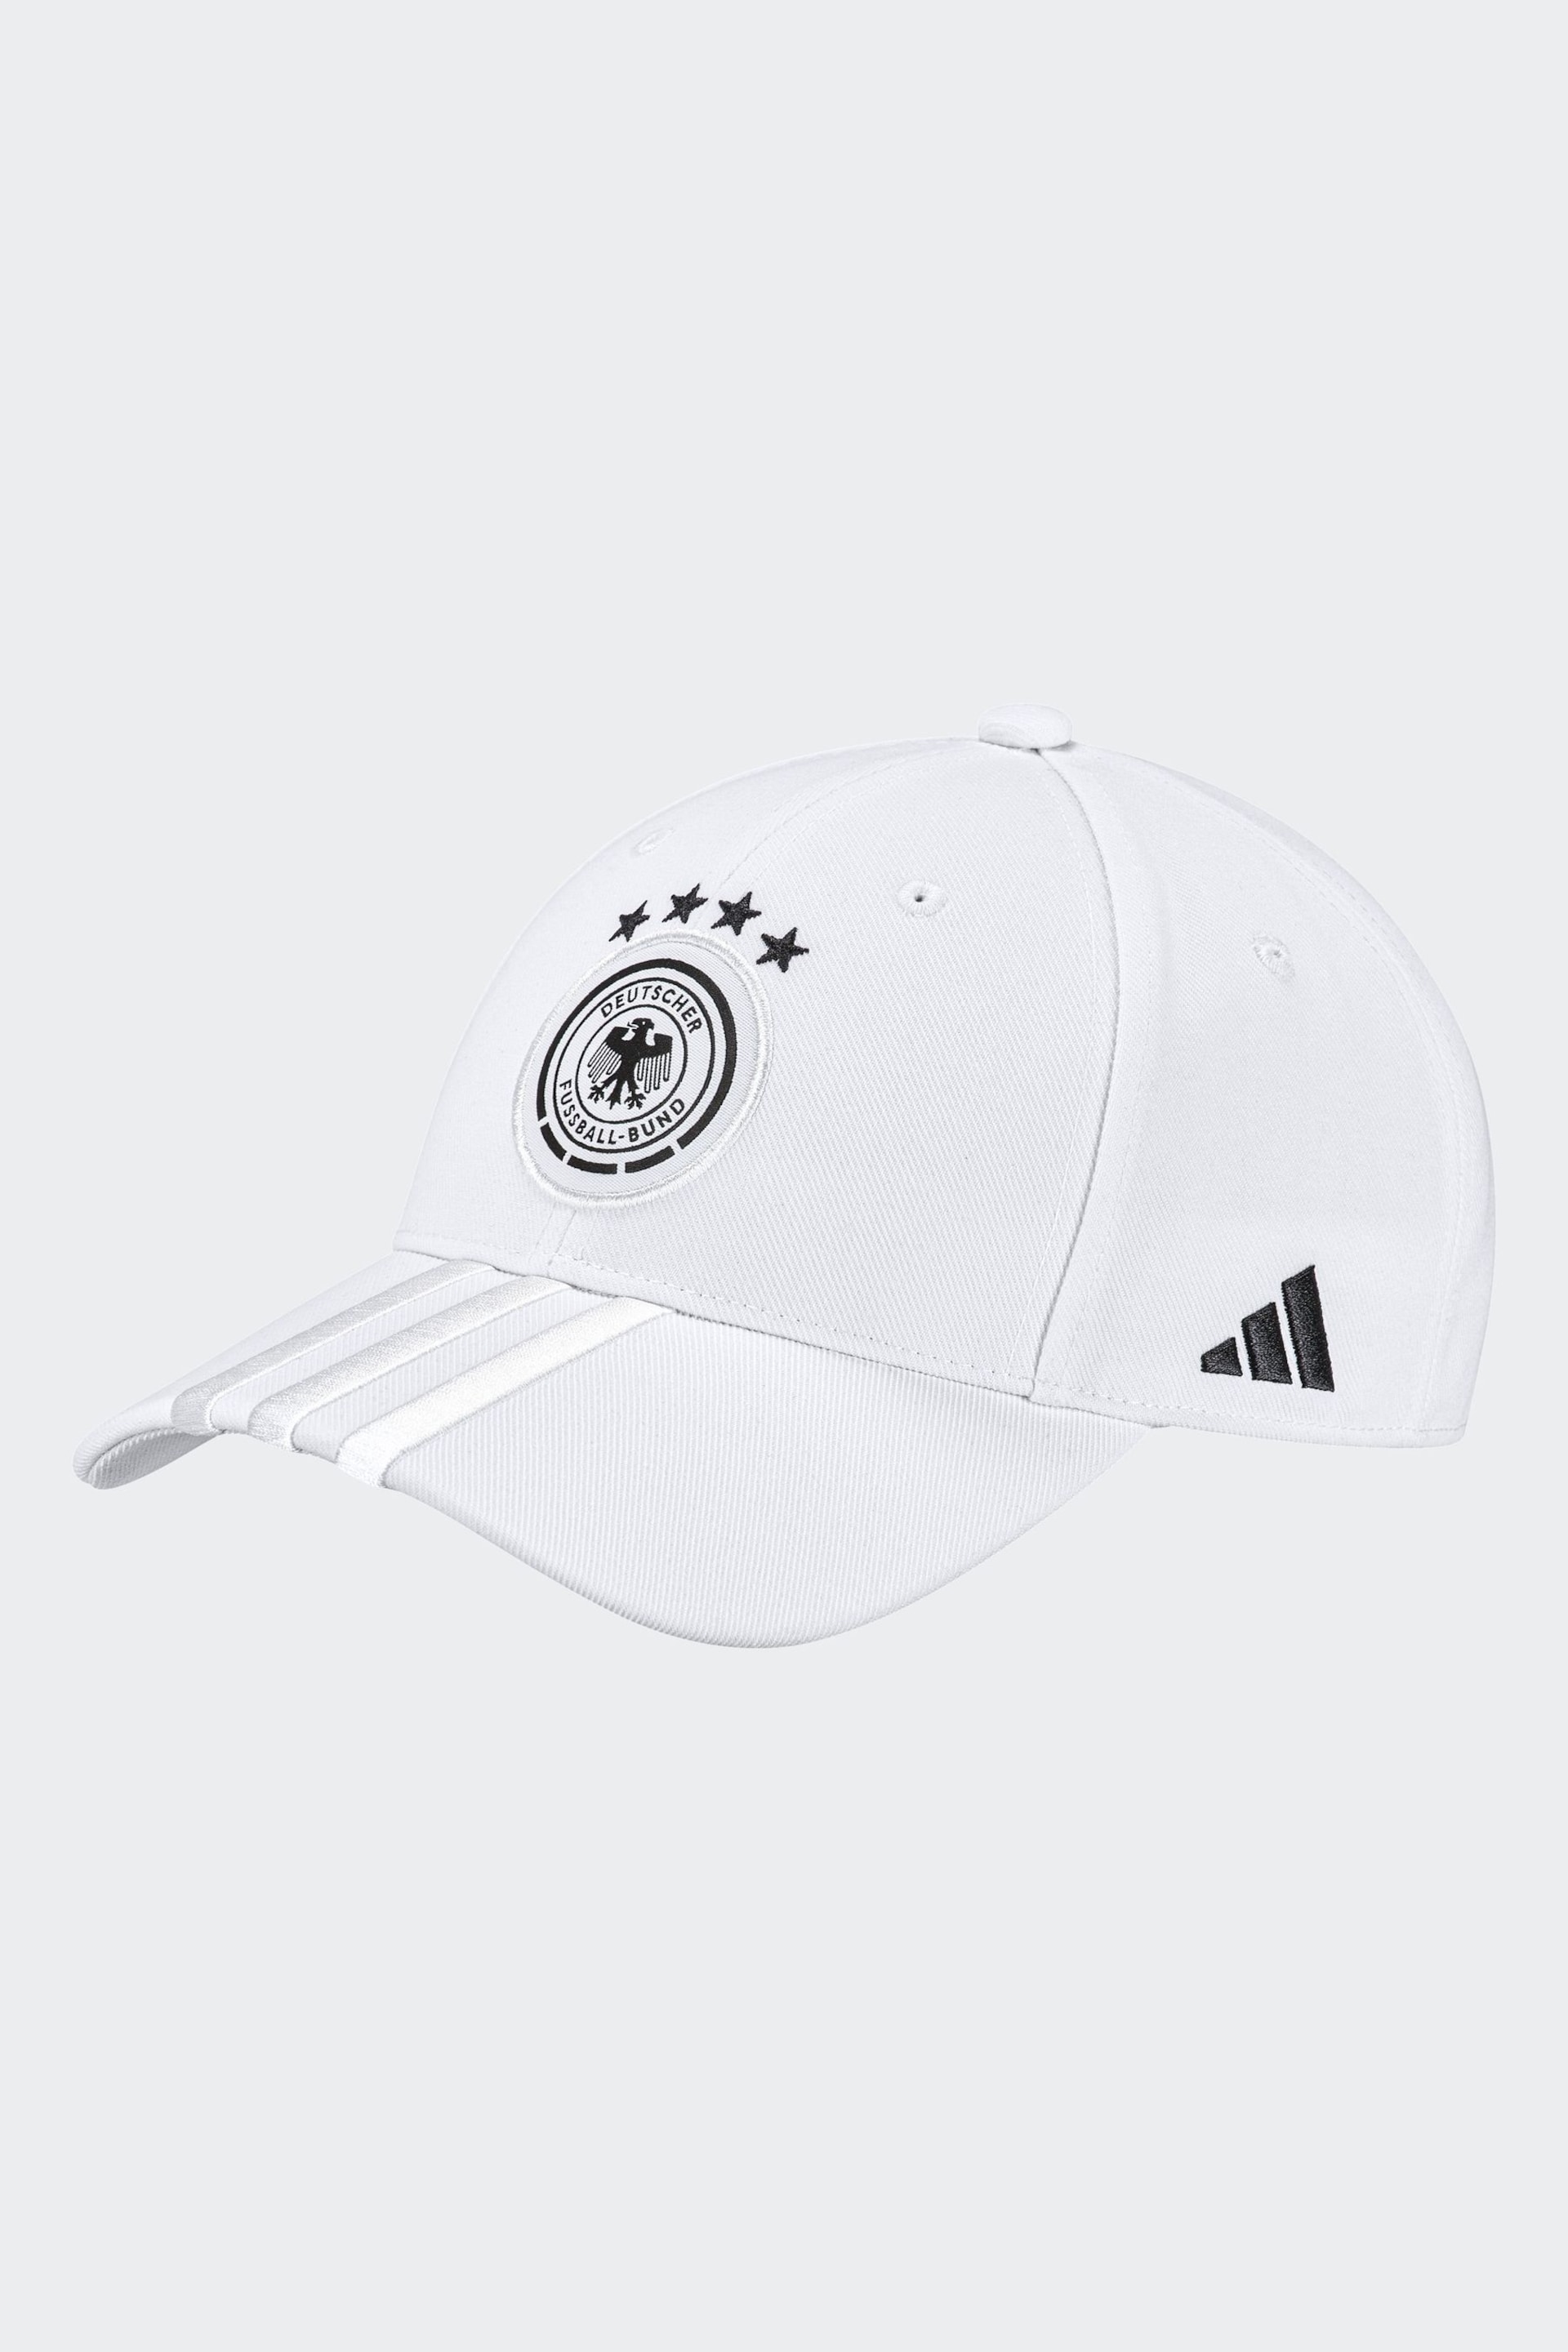 adidas White Performance Cap - Image 1 of 2